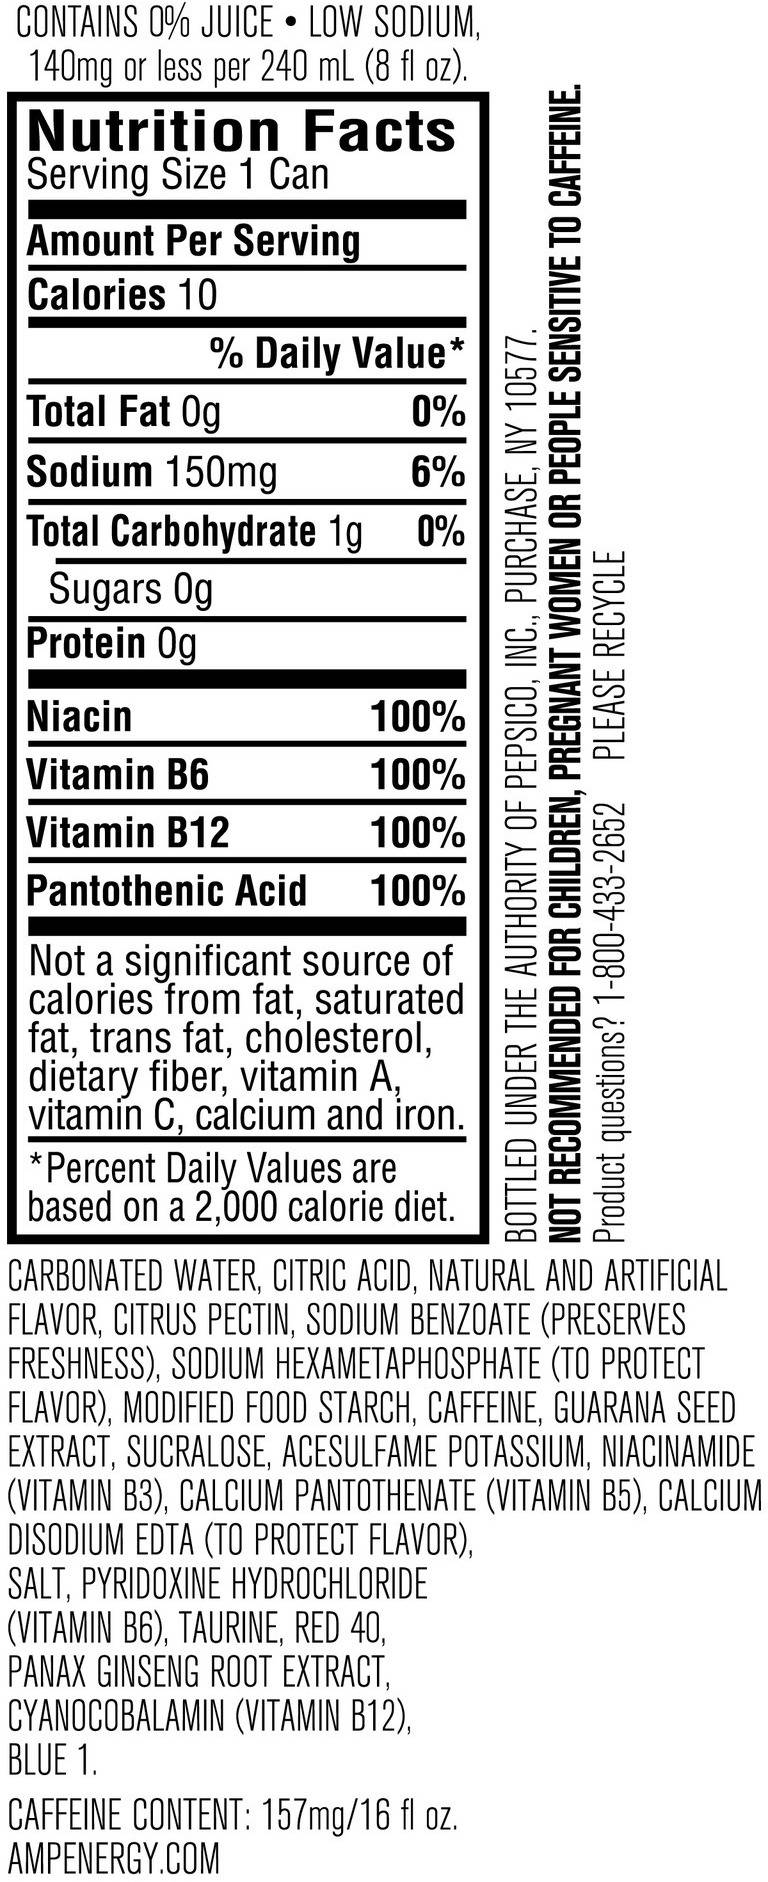 Image describing nutrition information for product AMP Energy Zero Watermelon